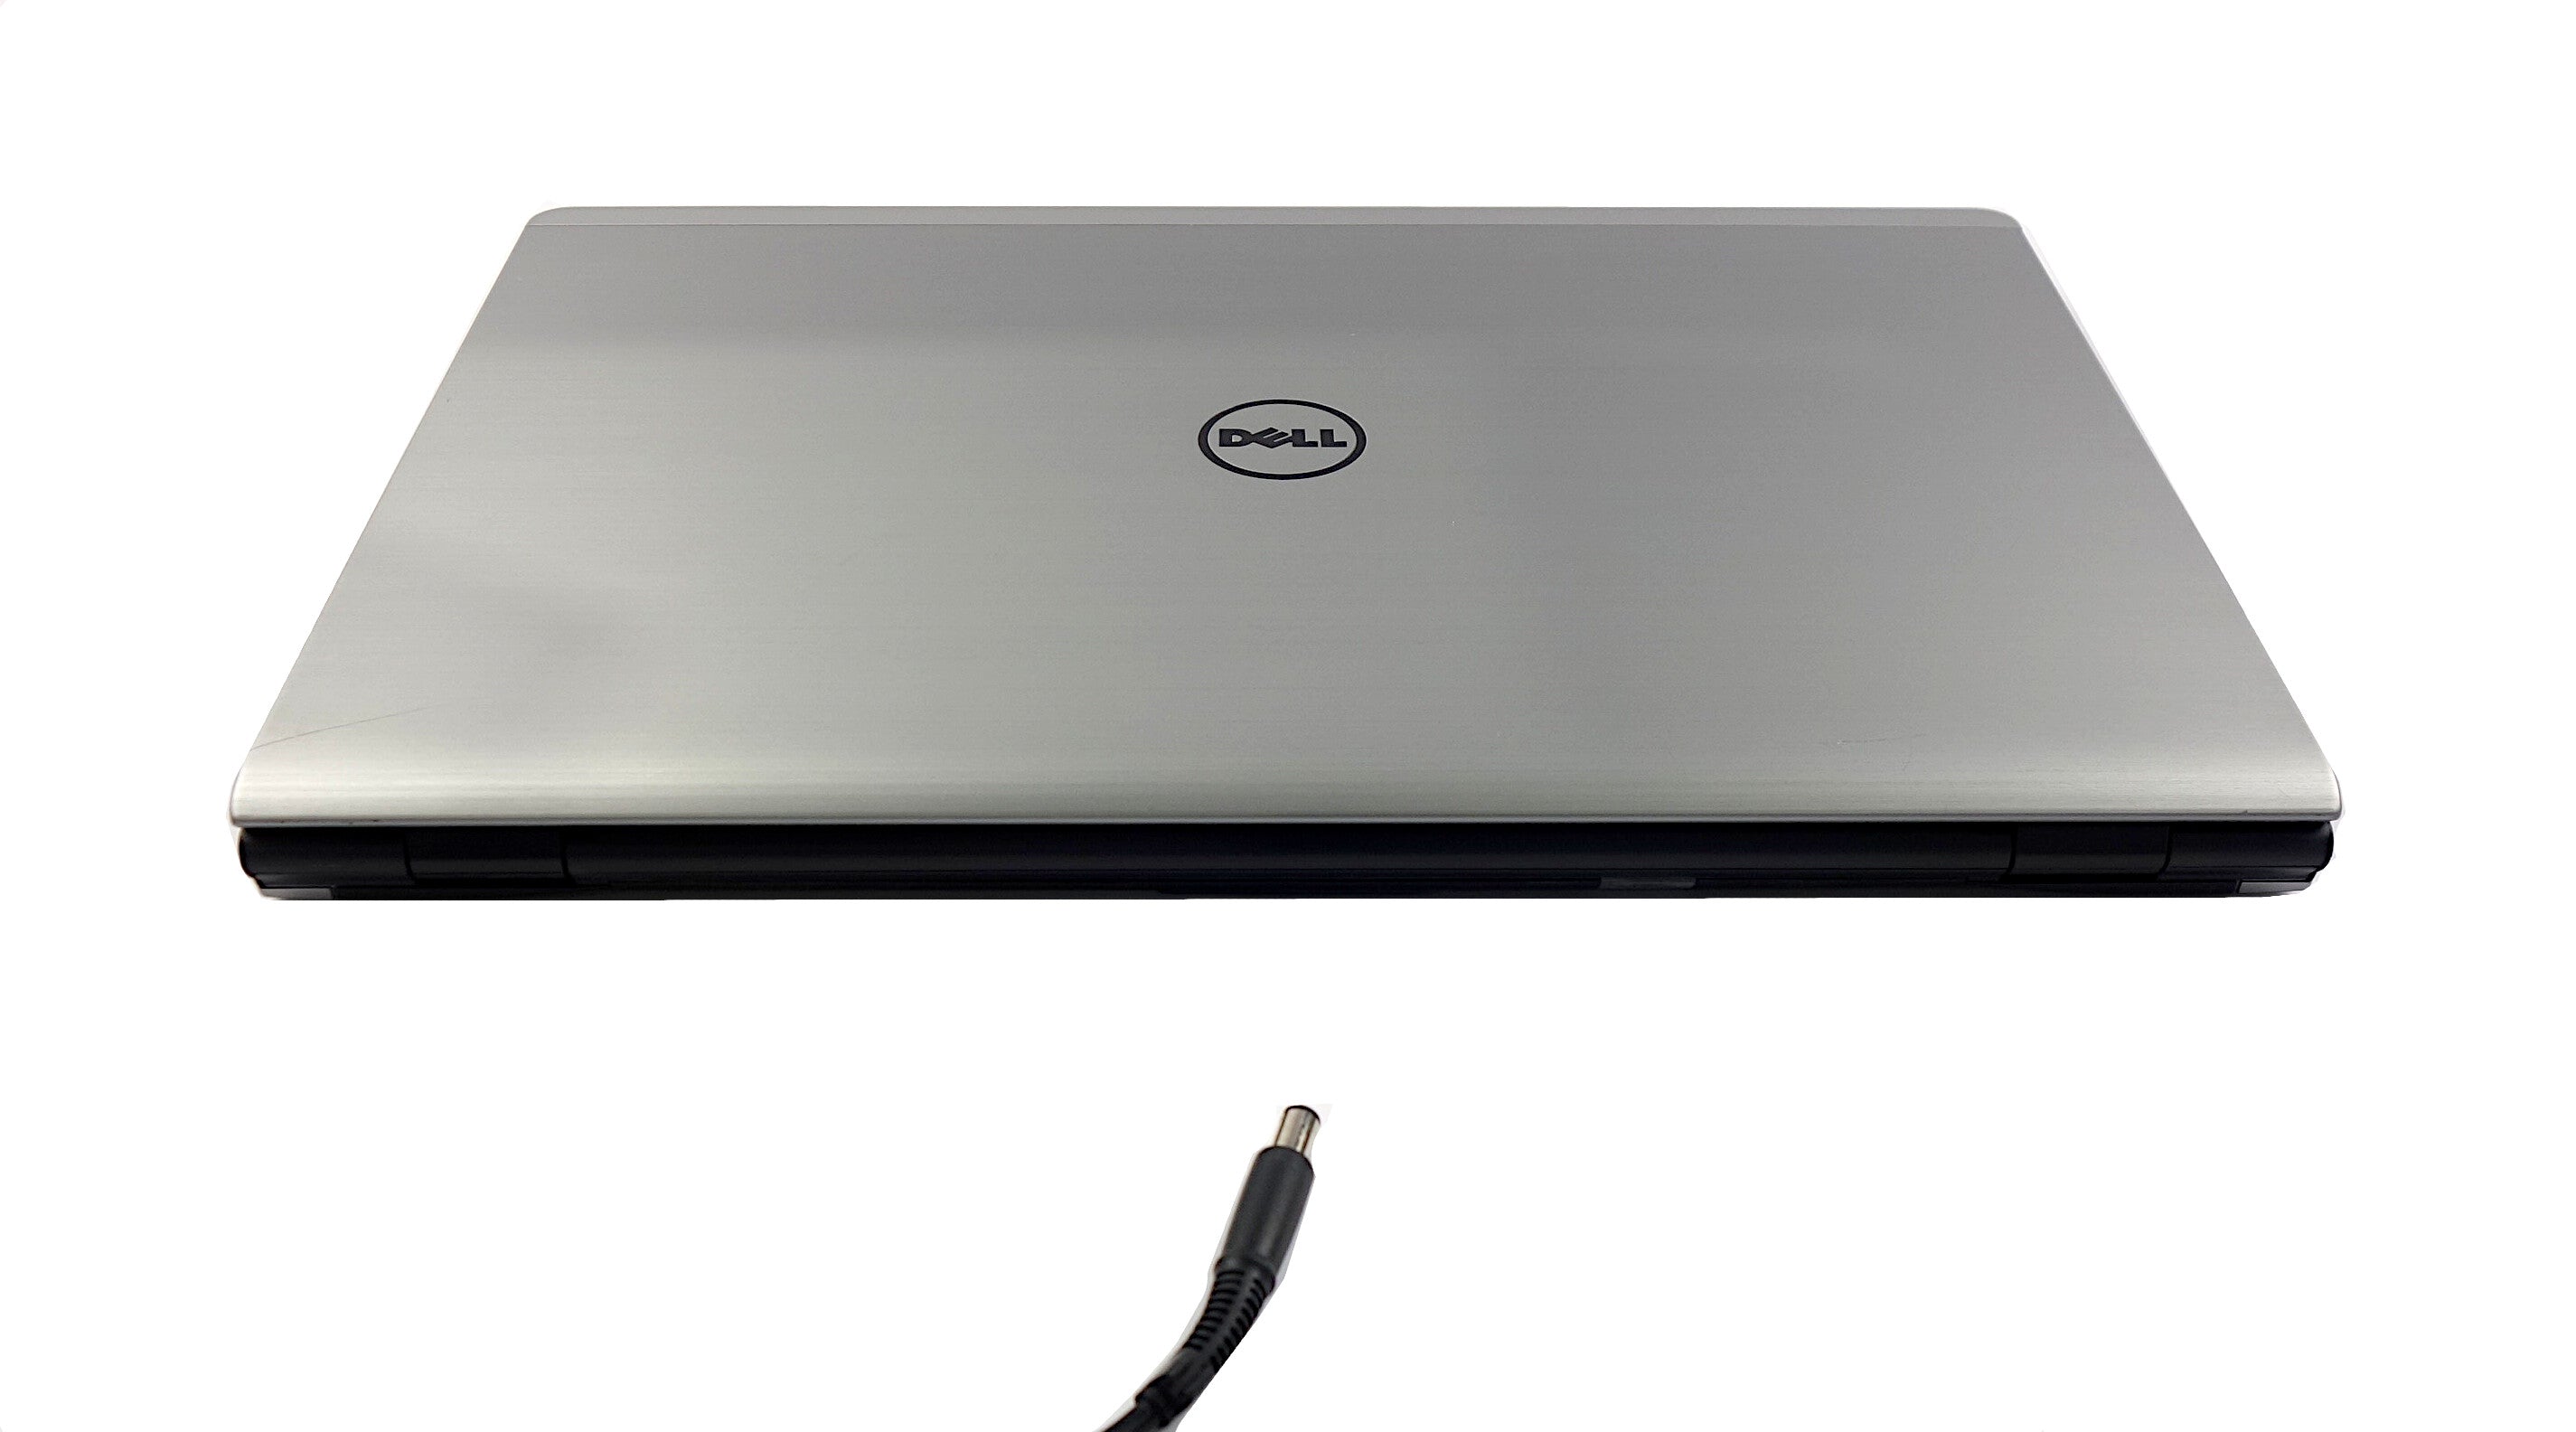 Dell Inspiron 5748 Laptop, 17.3" Core i7 4th Gen, 8GB RAM, 512GB SSD